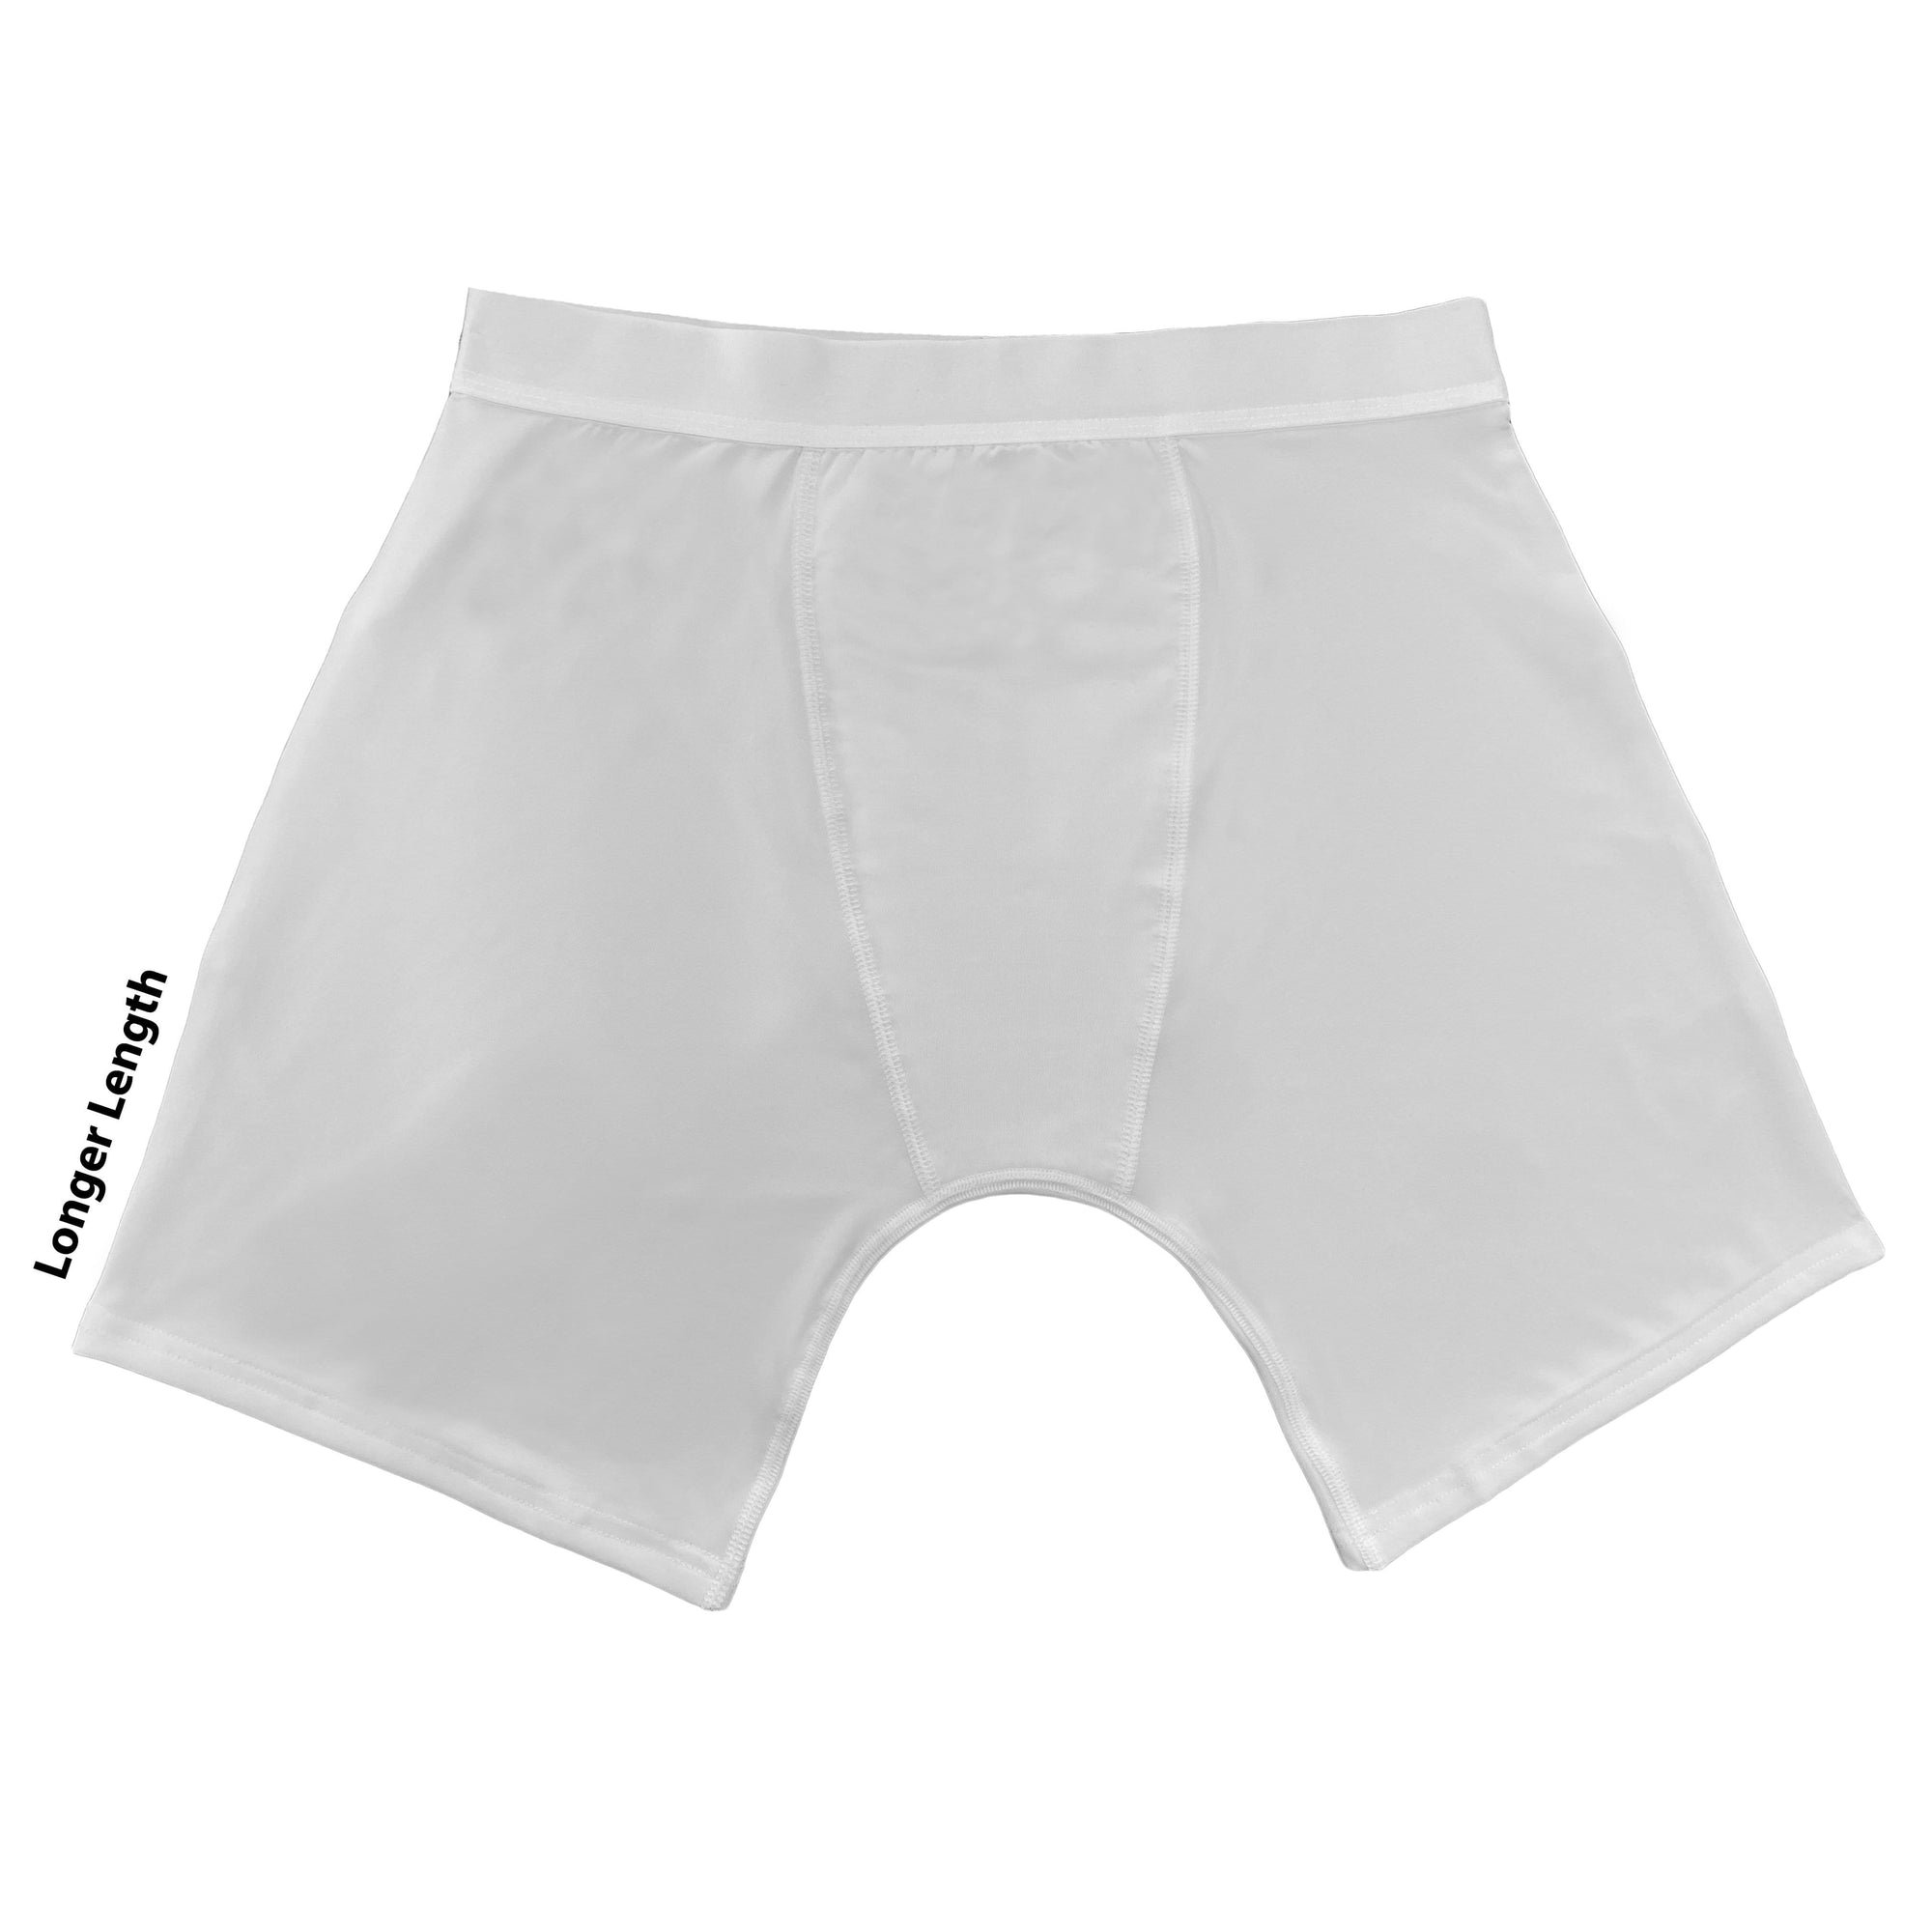 SLEEFS Soft Men's Cotton Underwear, Boxer Briefs With Pouch Support at   Men's Clothing store